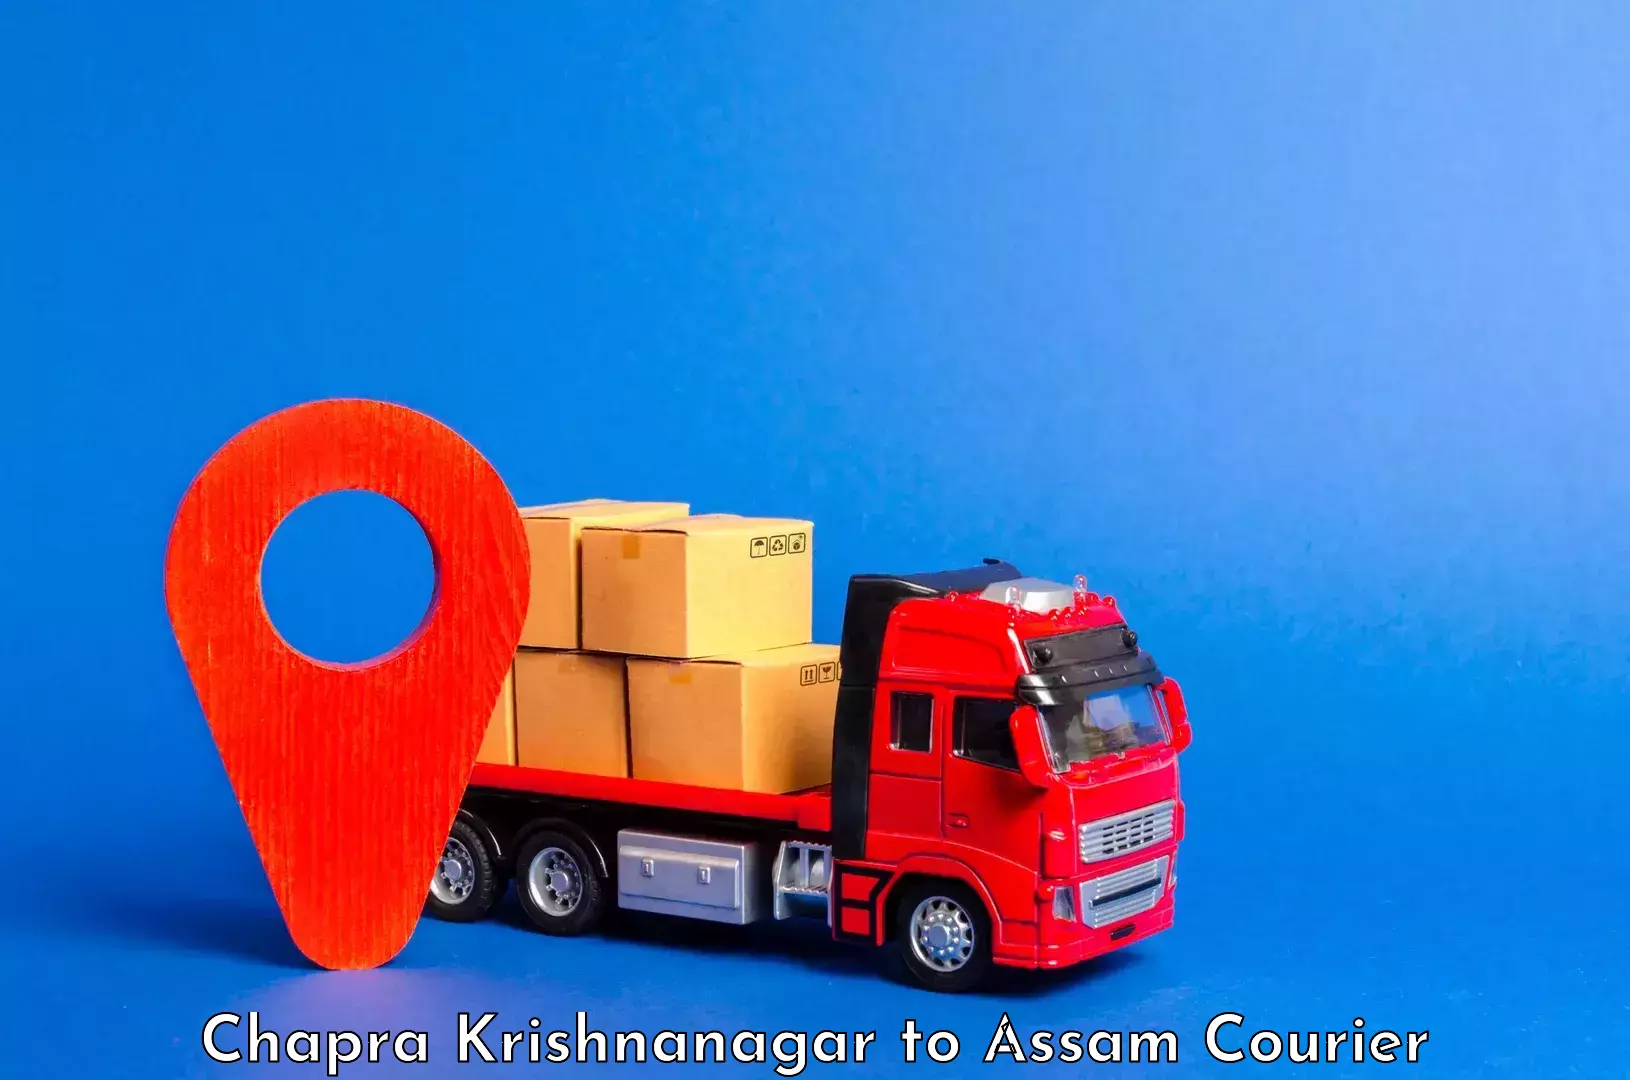 Emergency baggage service Chapra Krishnanagar to Assam